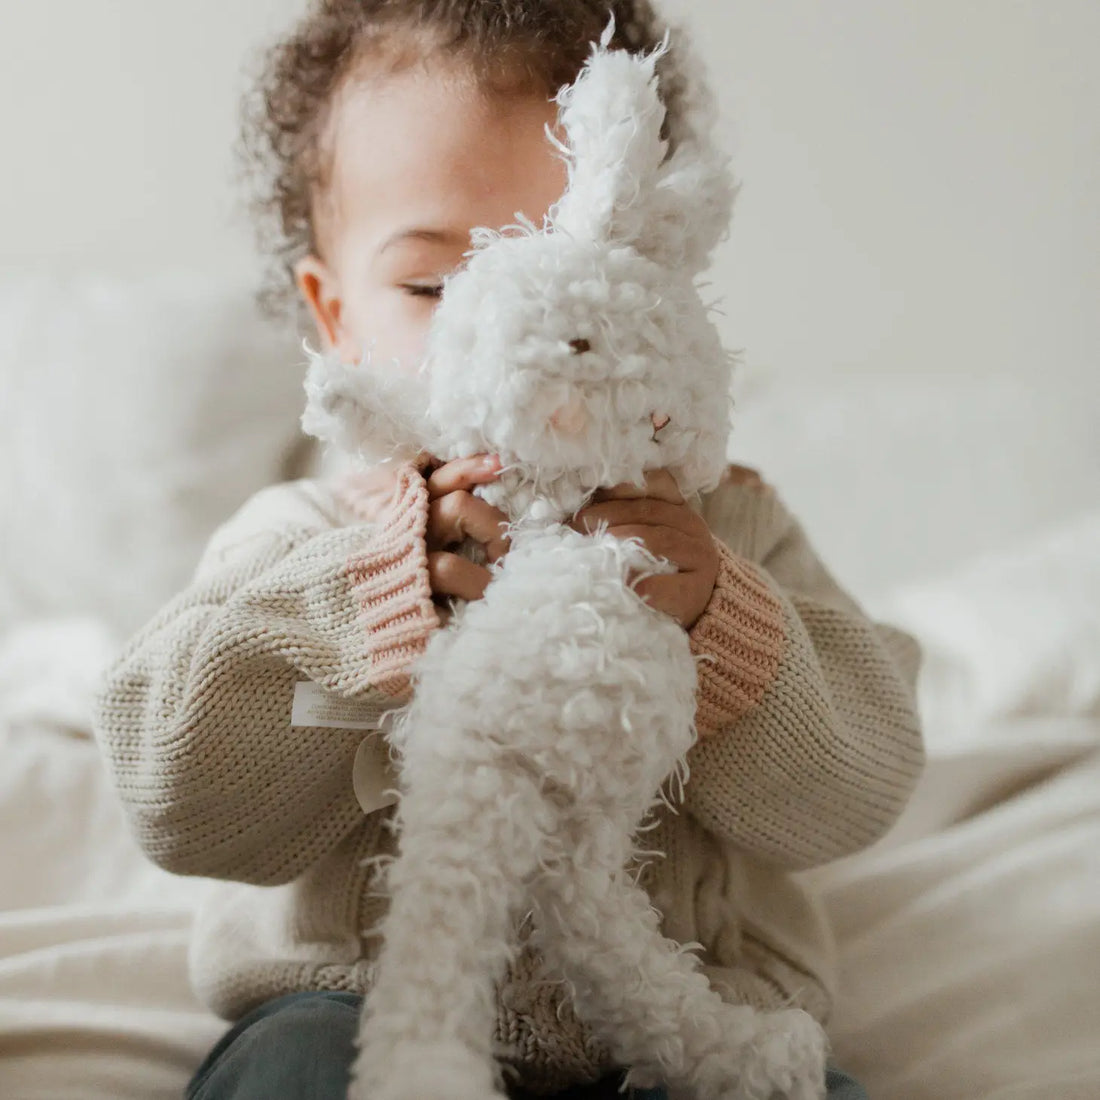 baby holding bunny plush